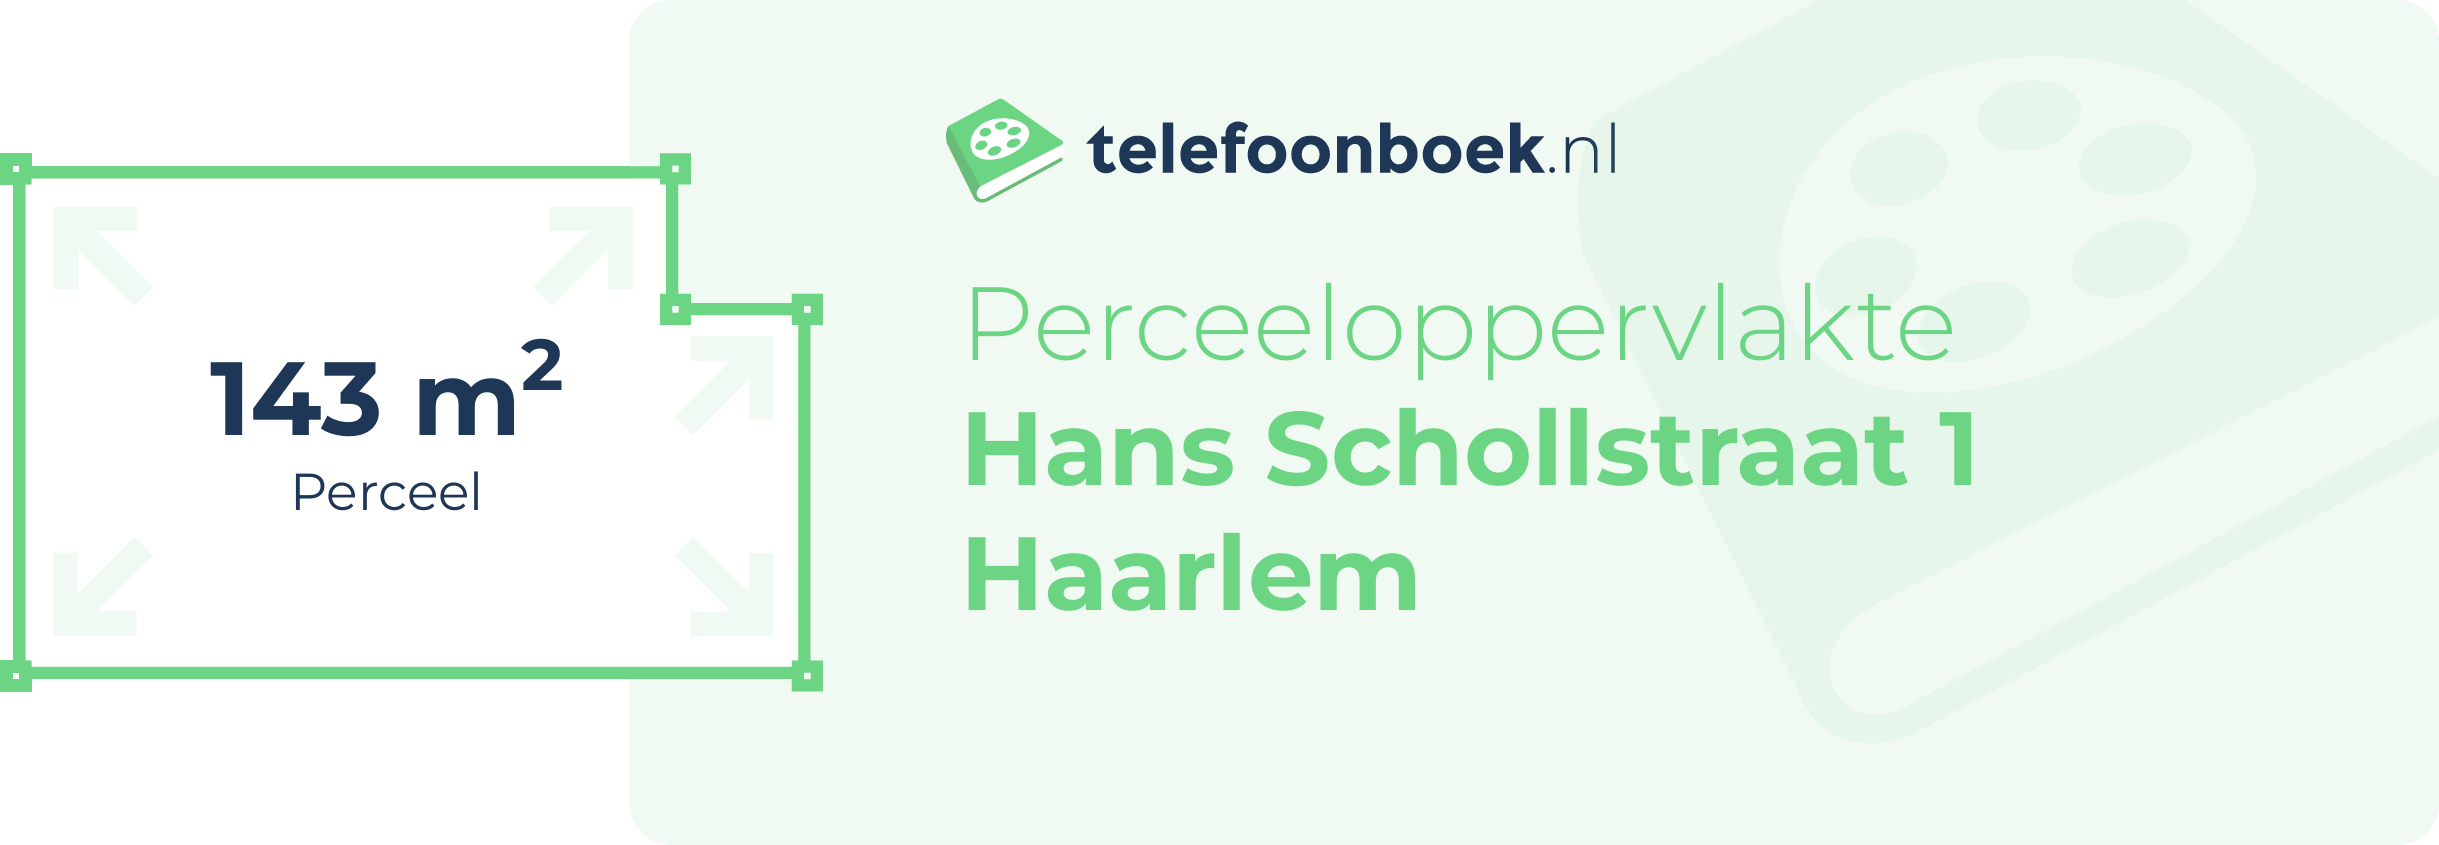 Perceeloppervlakte Hans Schollstraat 1 Haarlem